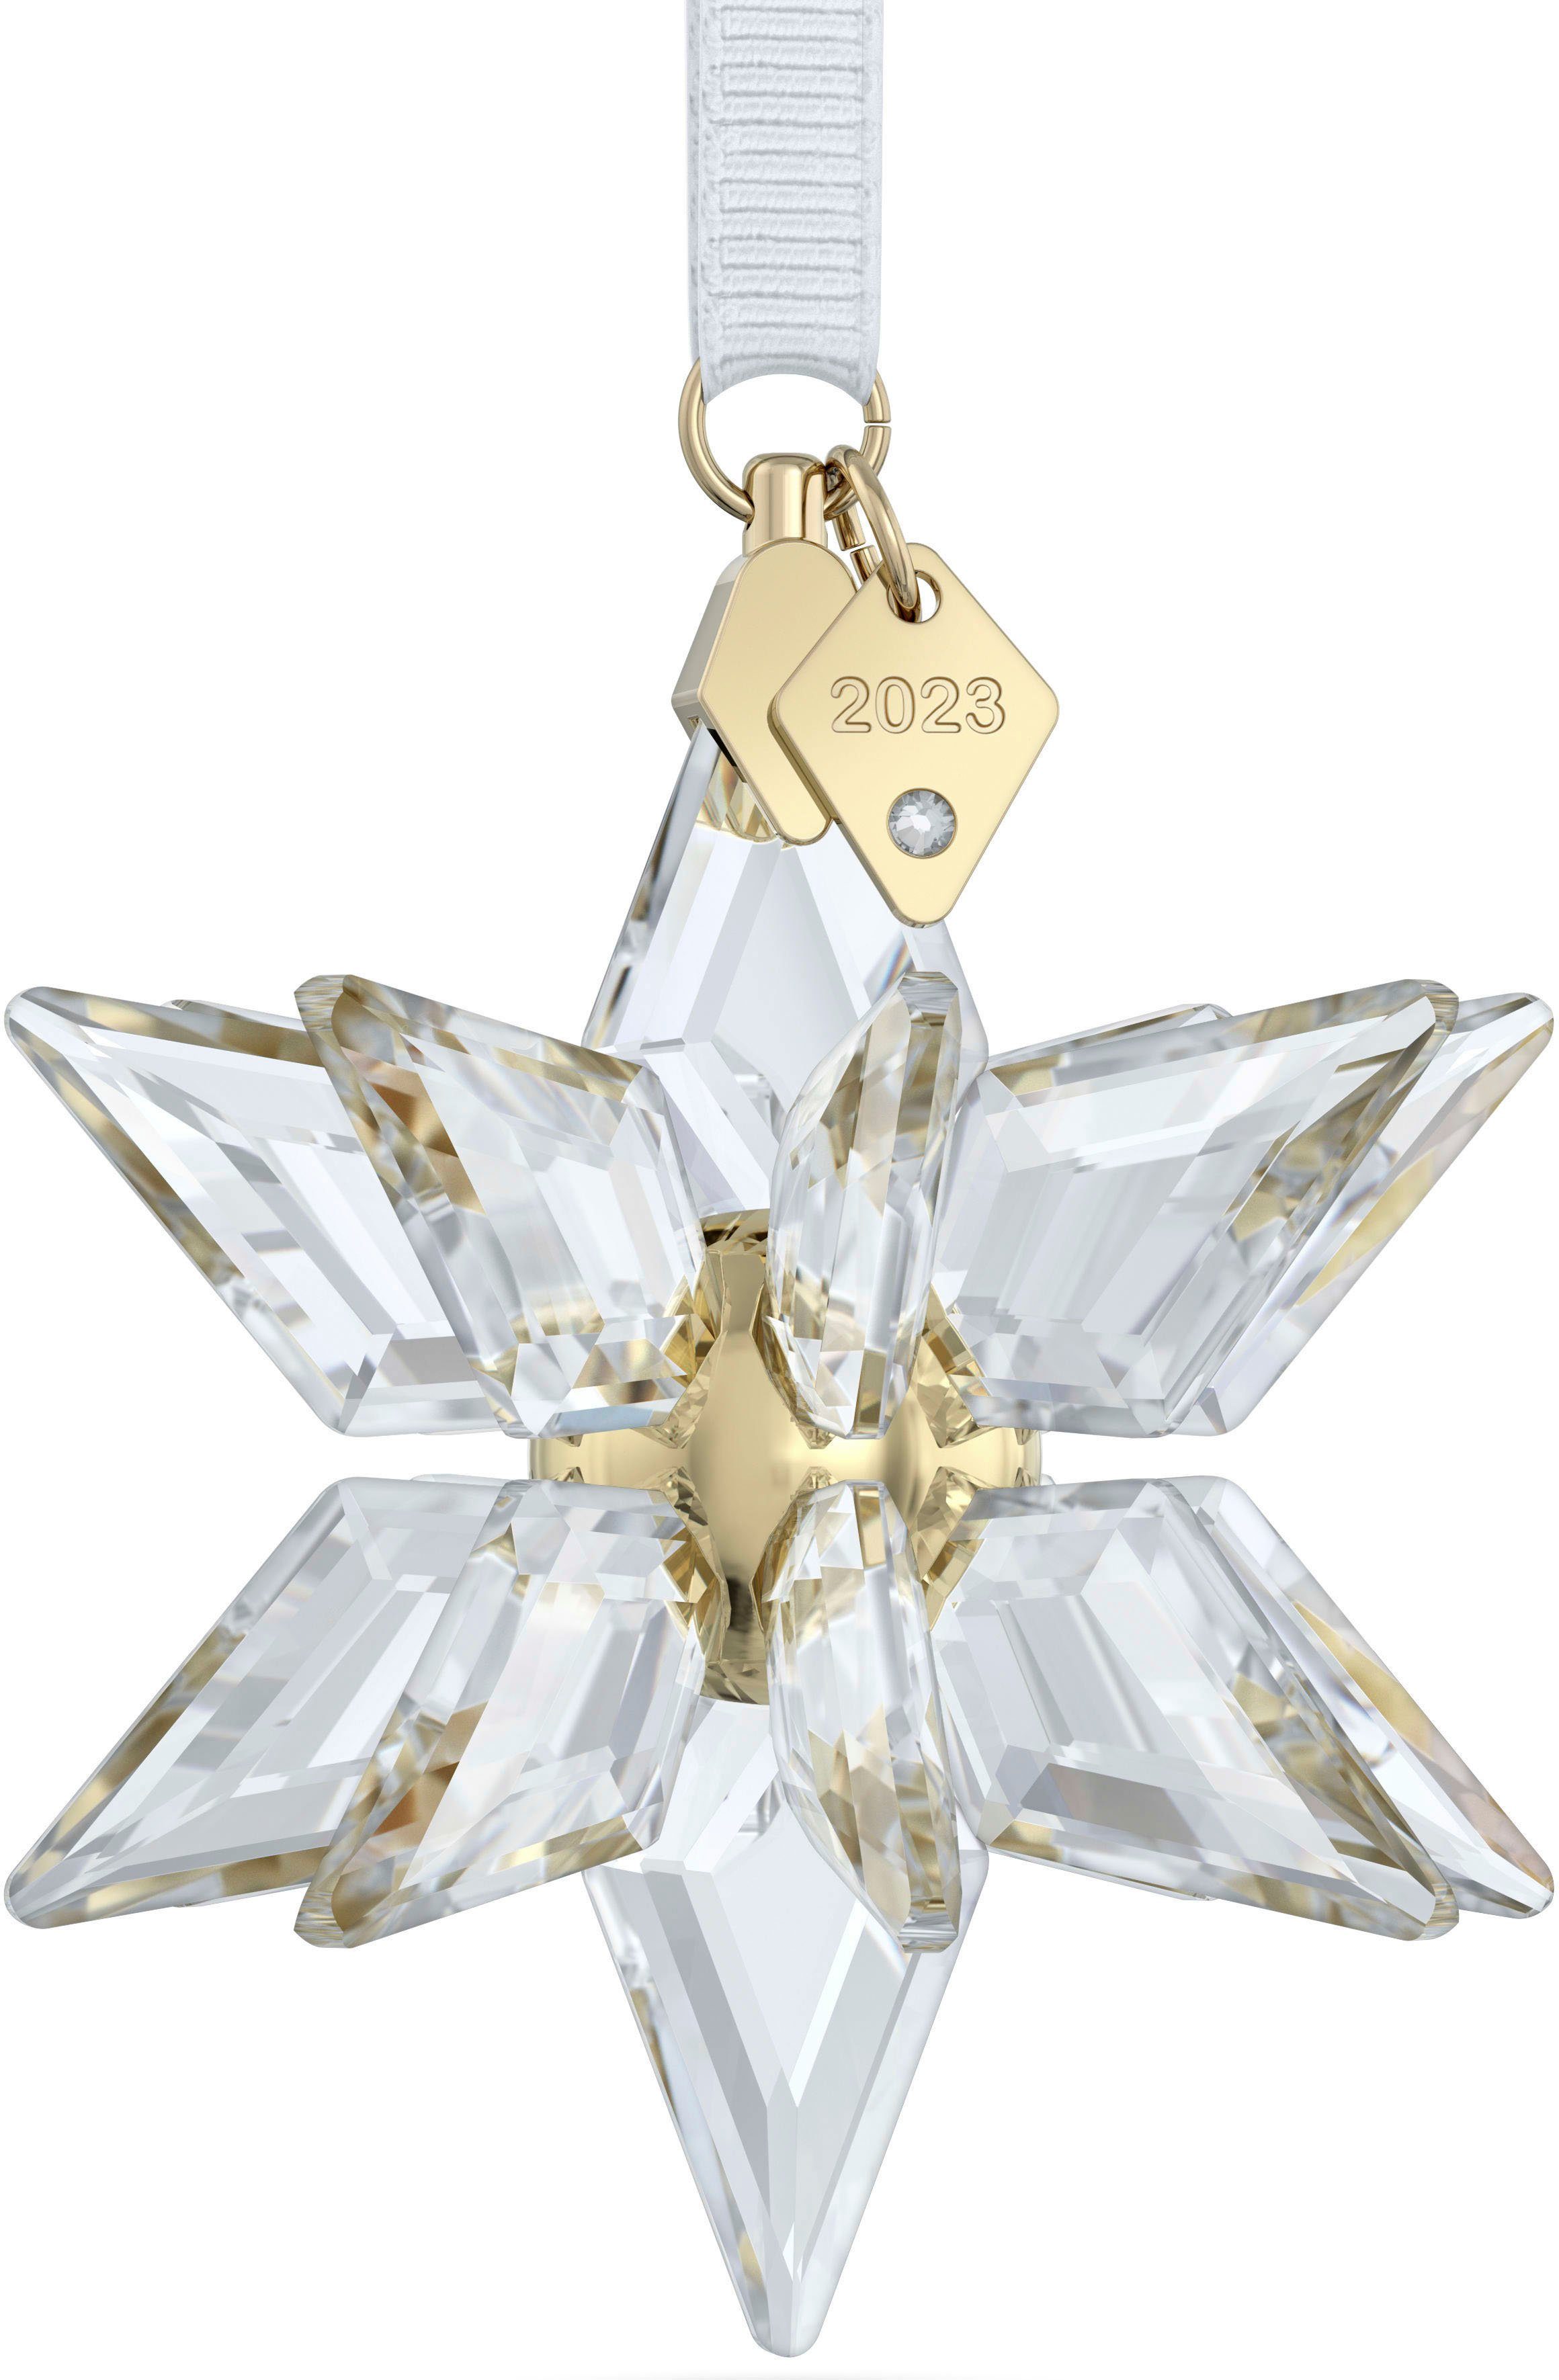 Swarovski Dekohänger ORNAMENT FESTIVE 3D 2023, 5651397, 5653577 (1 St), Swarovski® Kristall kristallweiß-goldfarben-weiß